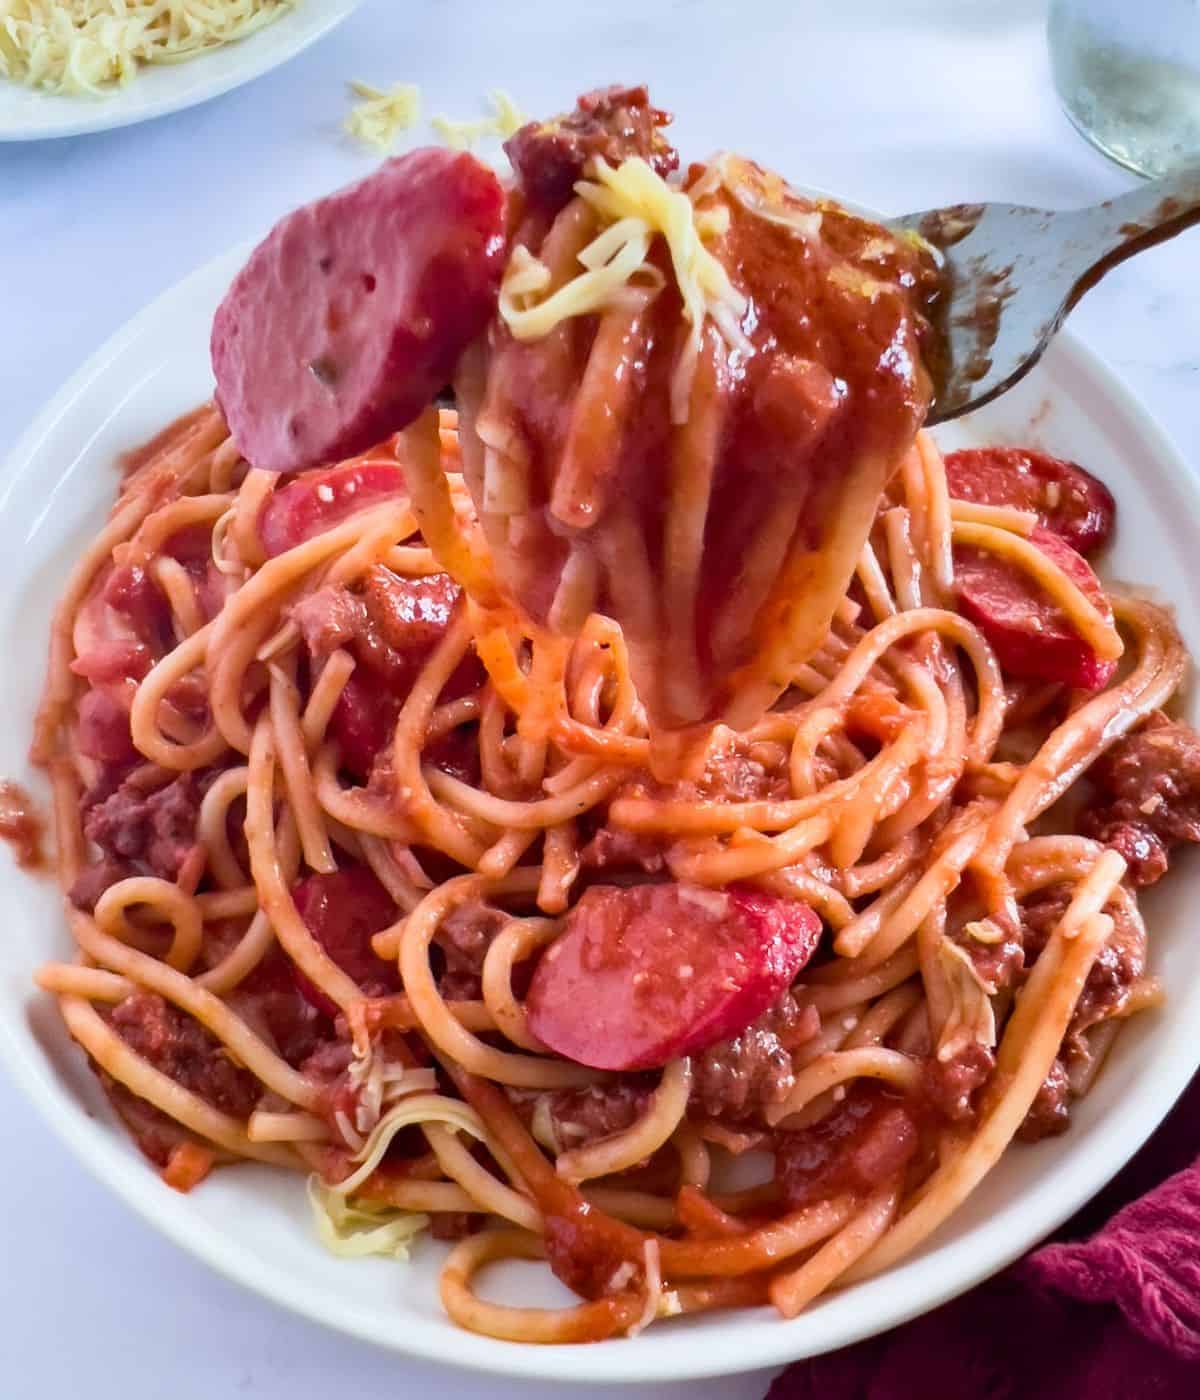 Filipino-style spaghetti with a fork.